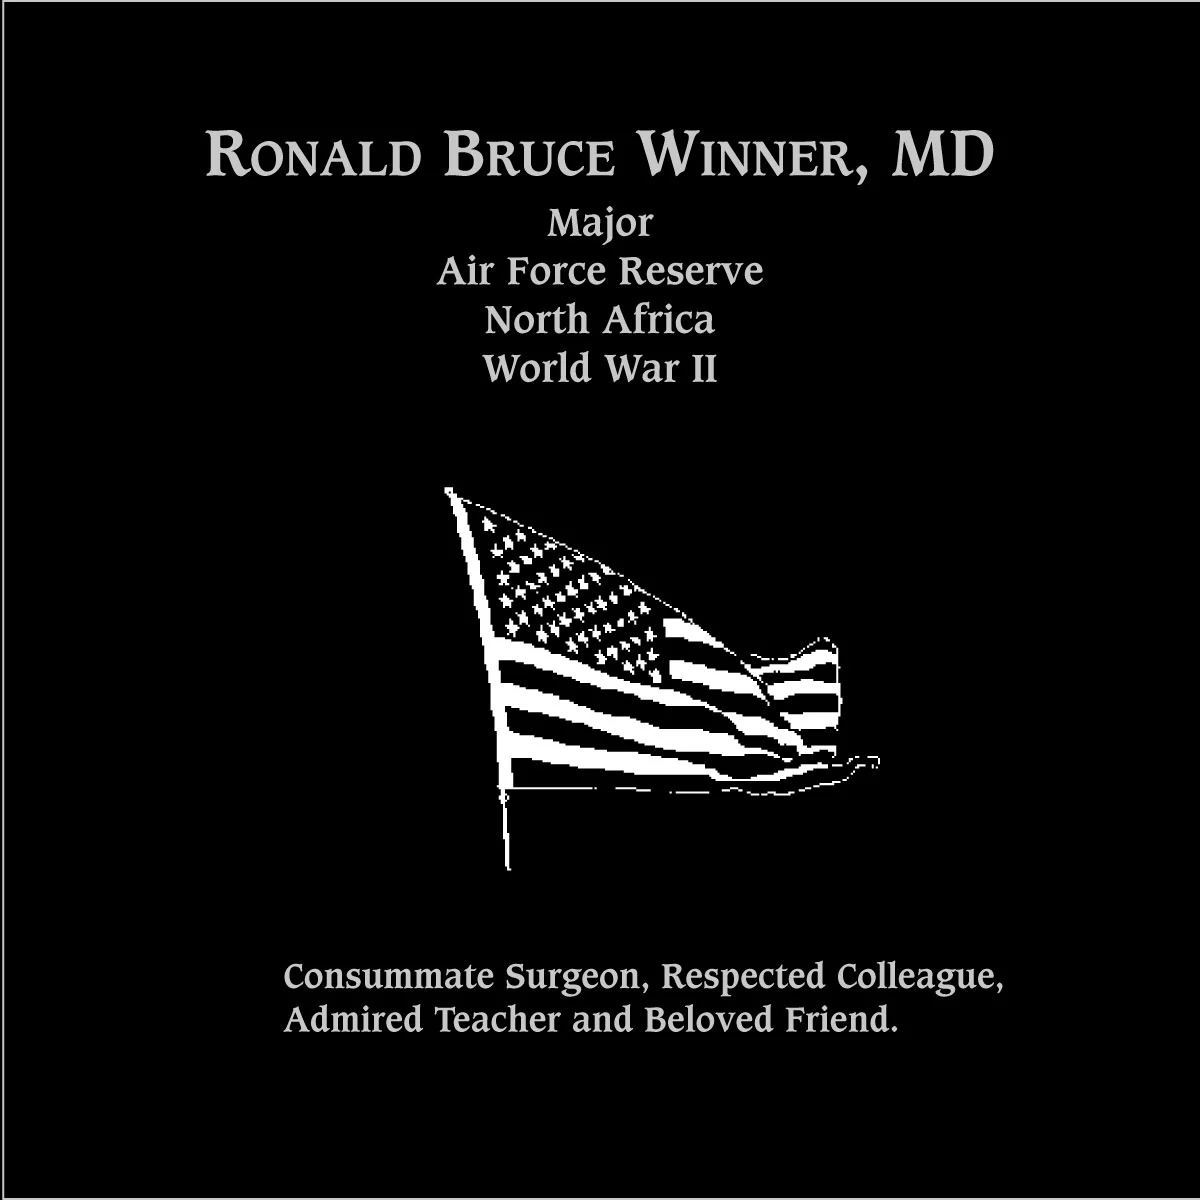 Ronald Bruce Winner